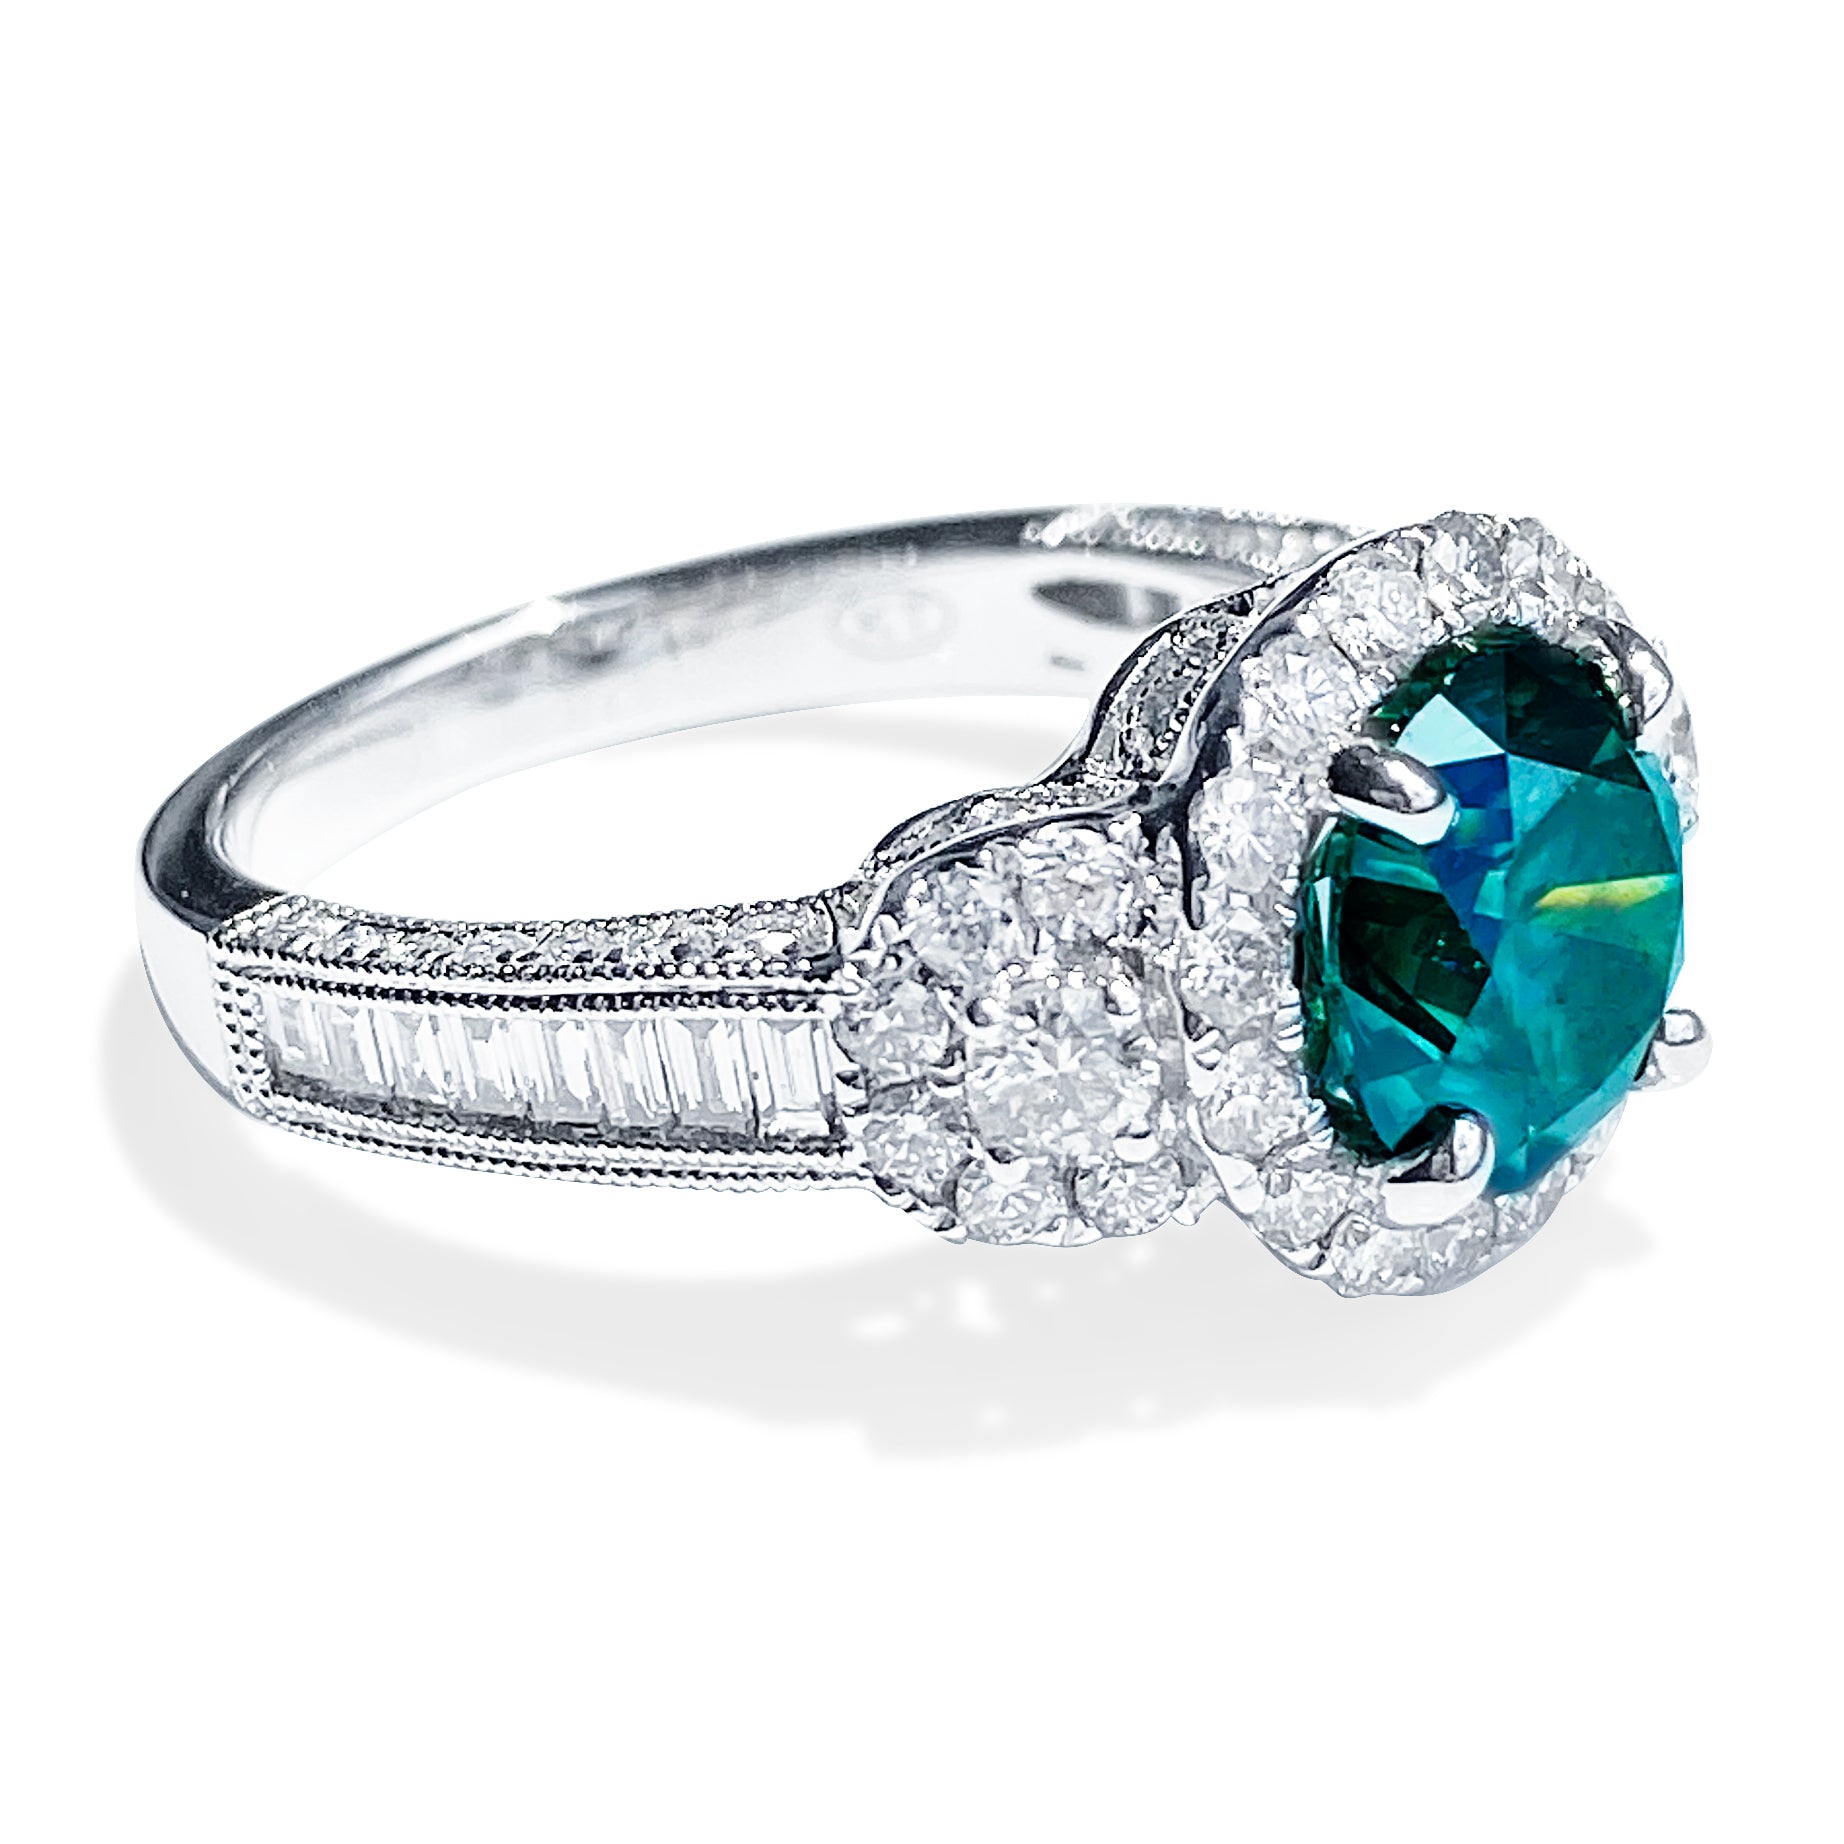 2.01 Carat Fancy Blue Round Brilliant Diamond Halo Ring